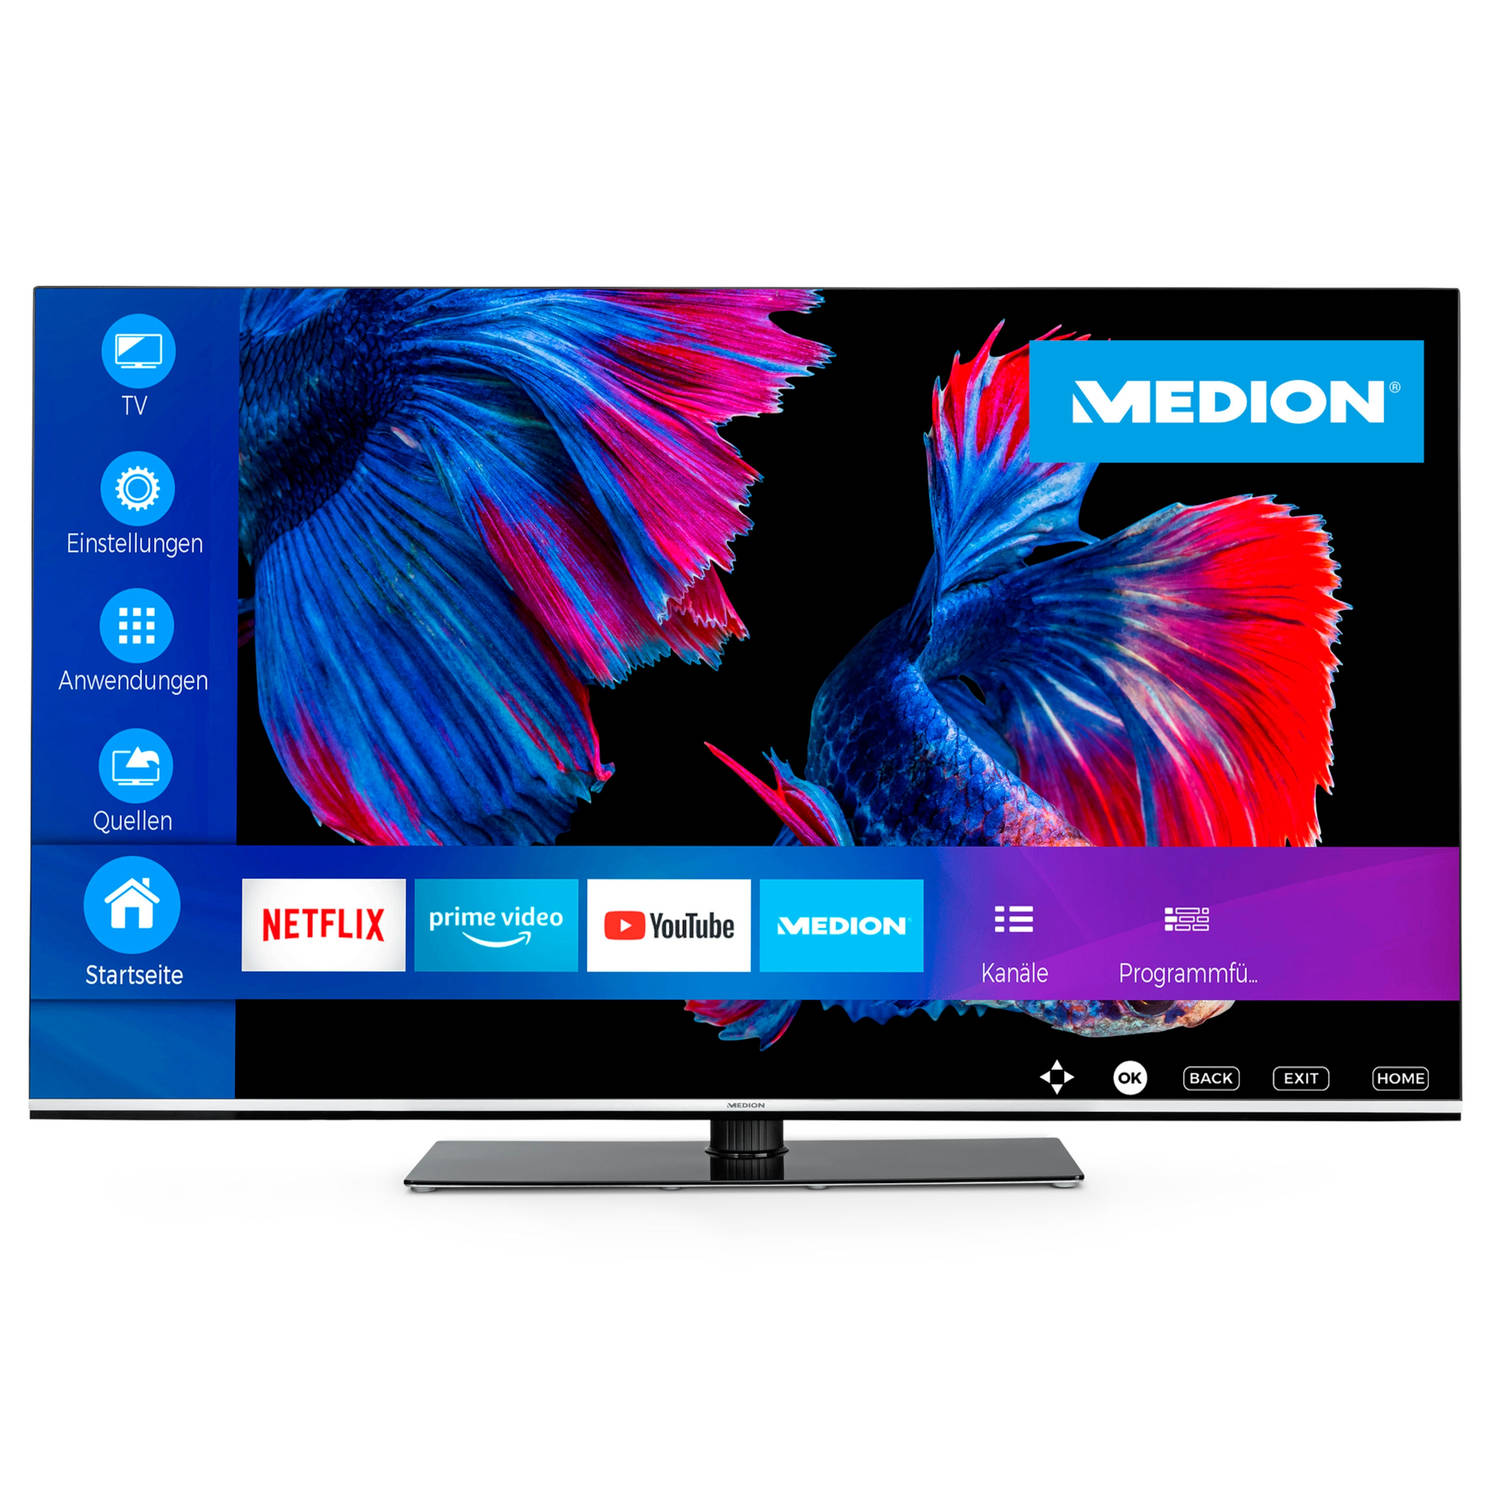 Medion X15564 - Smart TV - 138.8 cm - 55 inch - OLED - Europees model